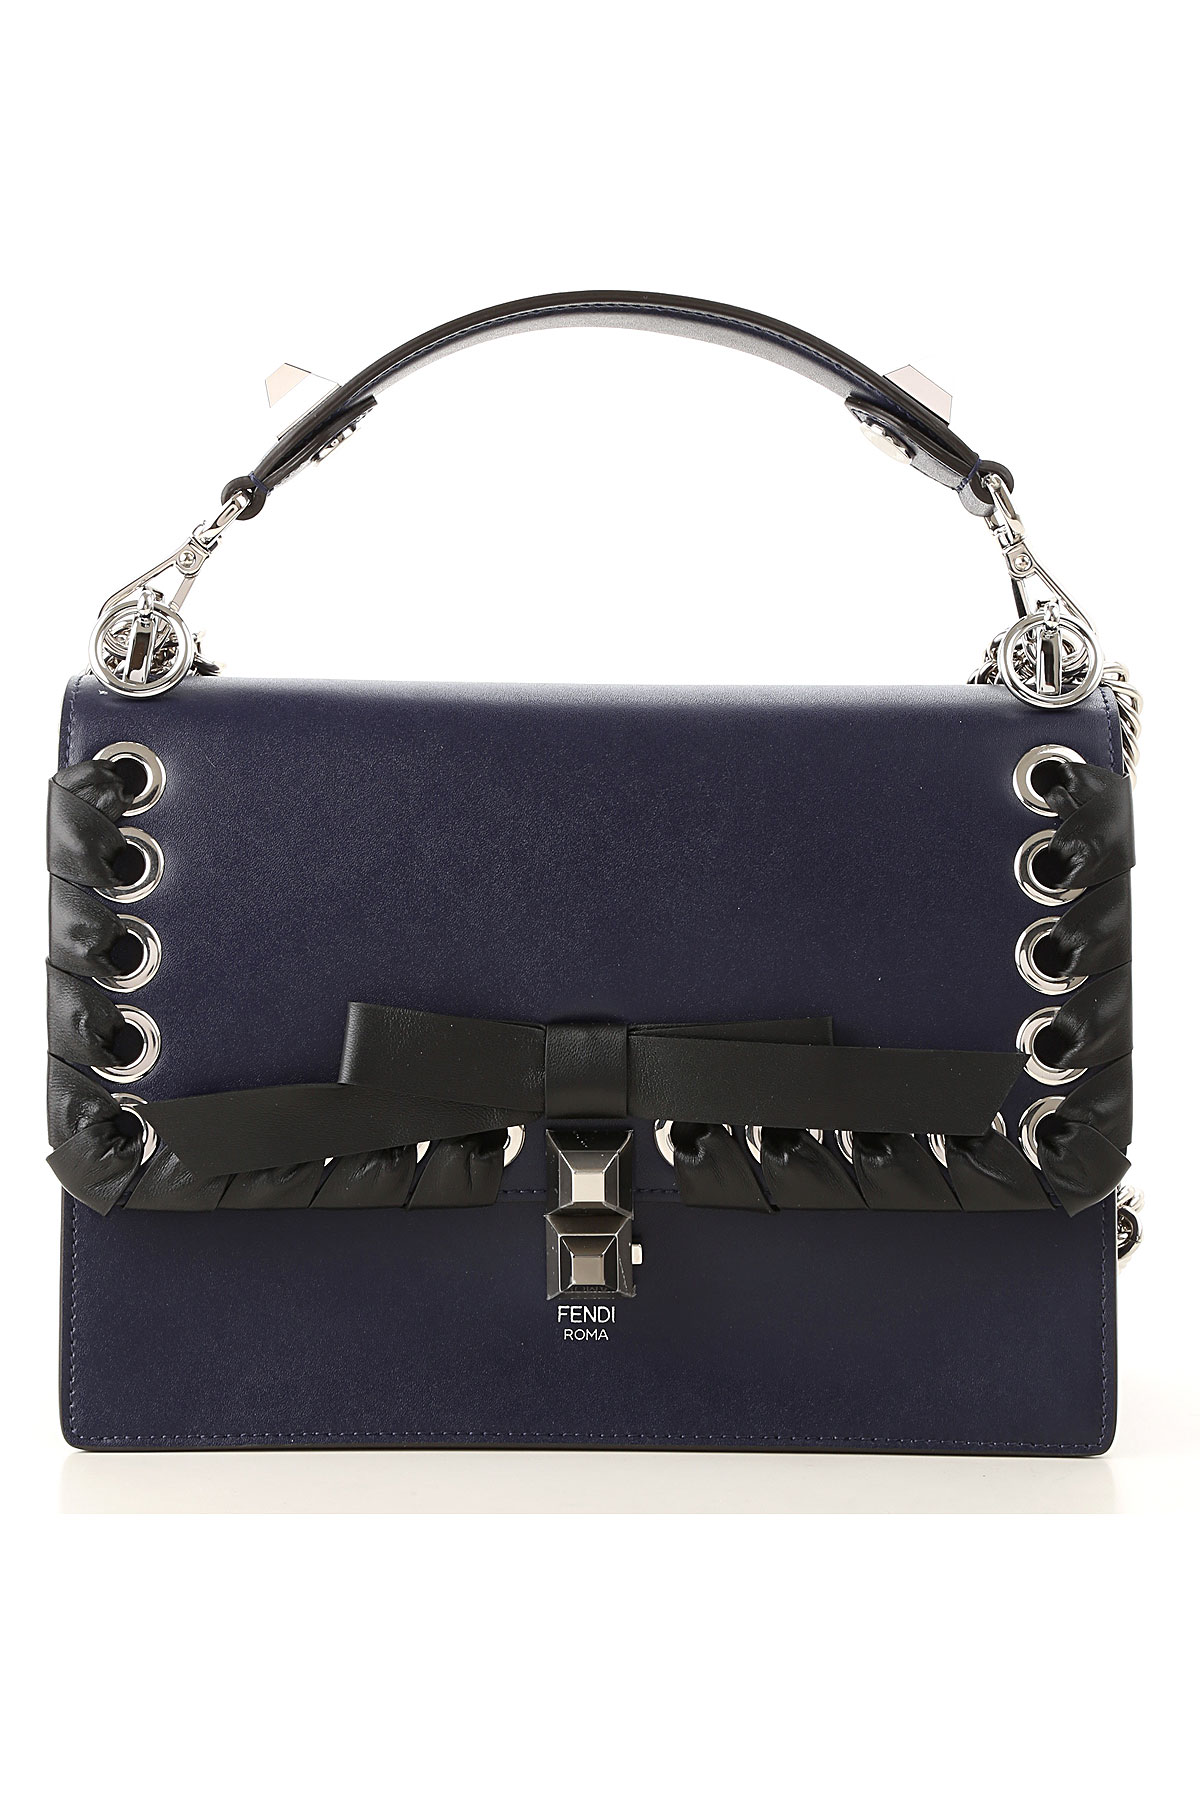 Handbags Fendi, Style code: 8bt283-a20a-f13qa